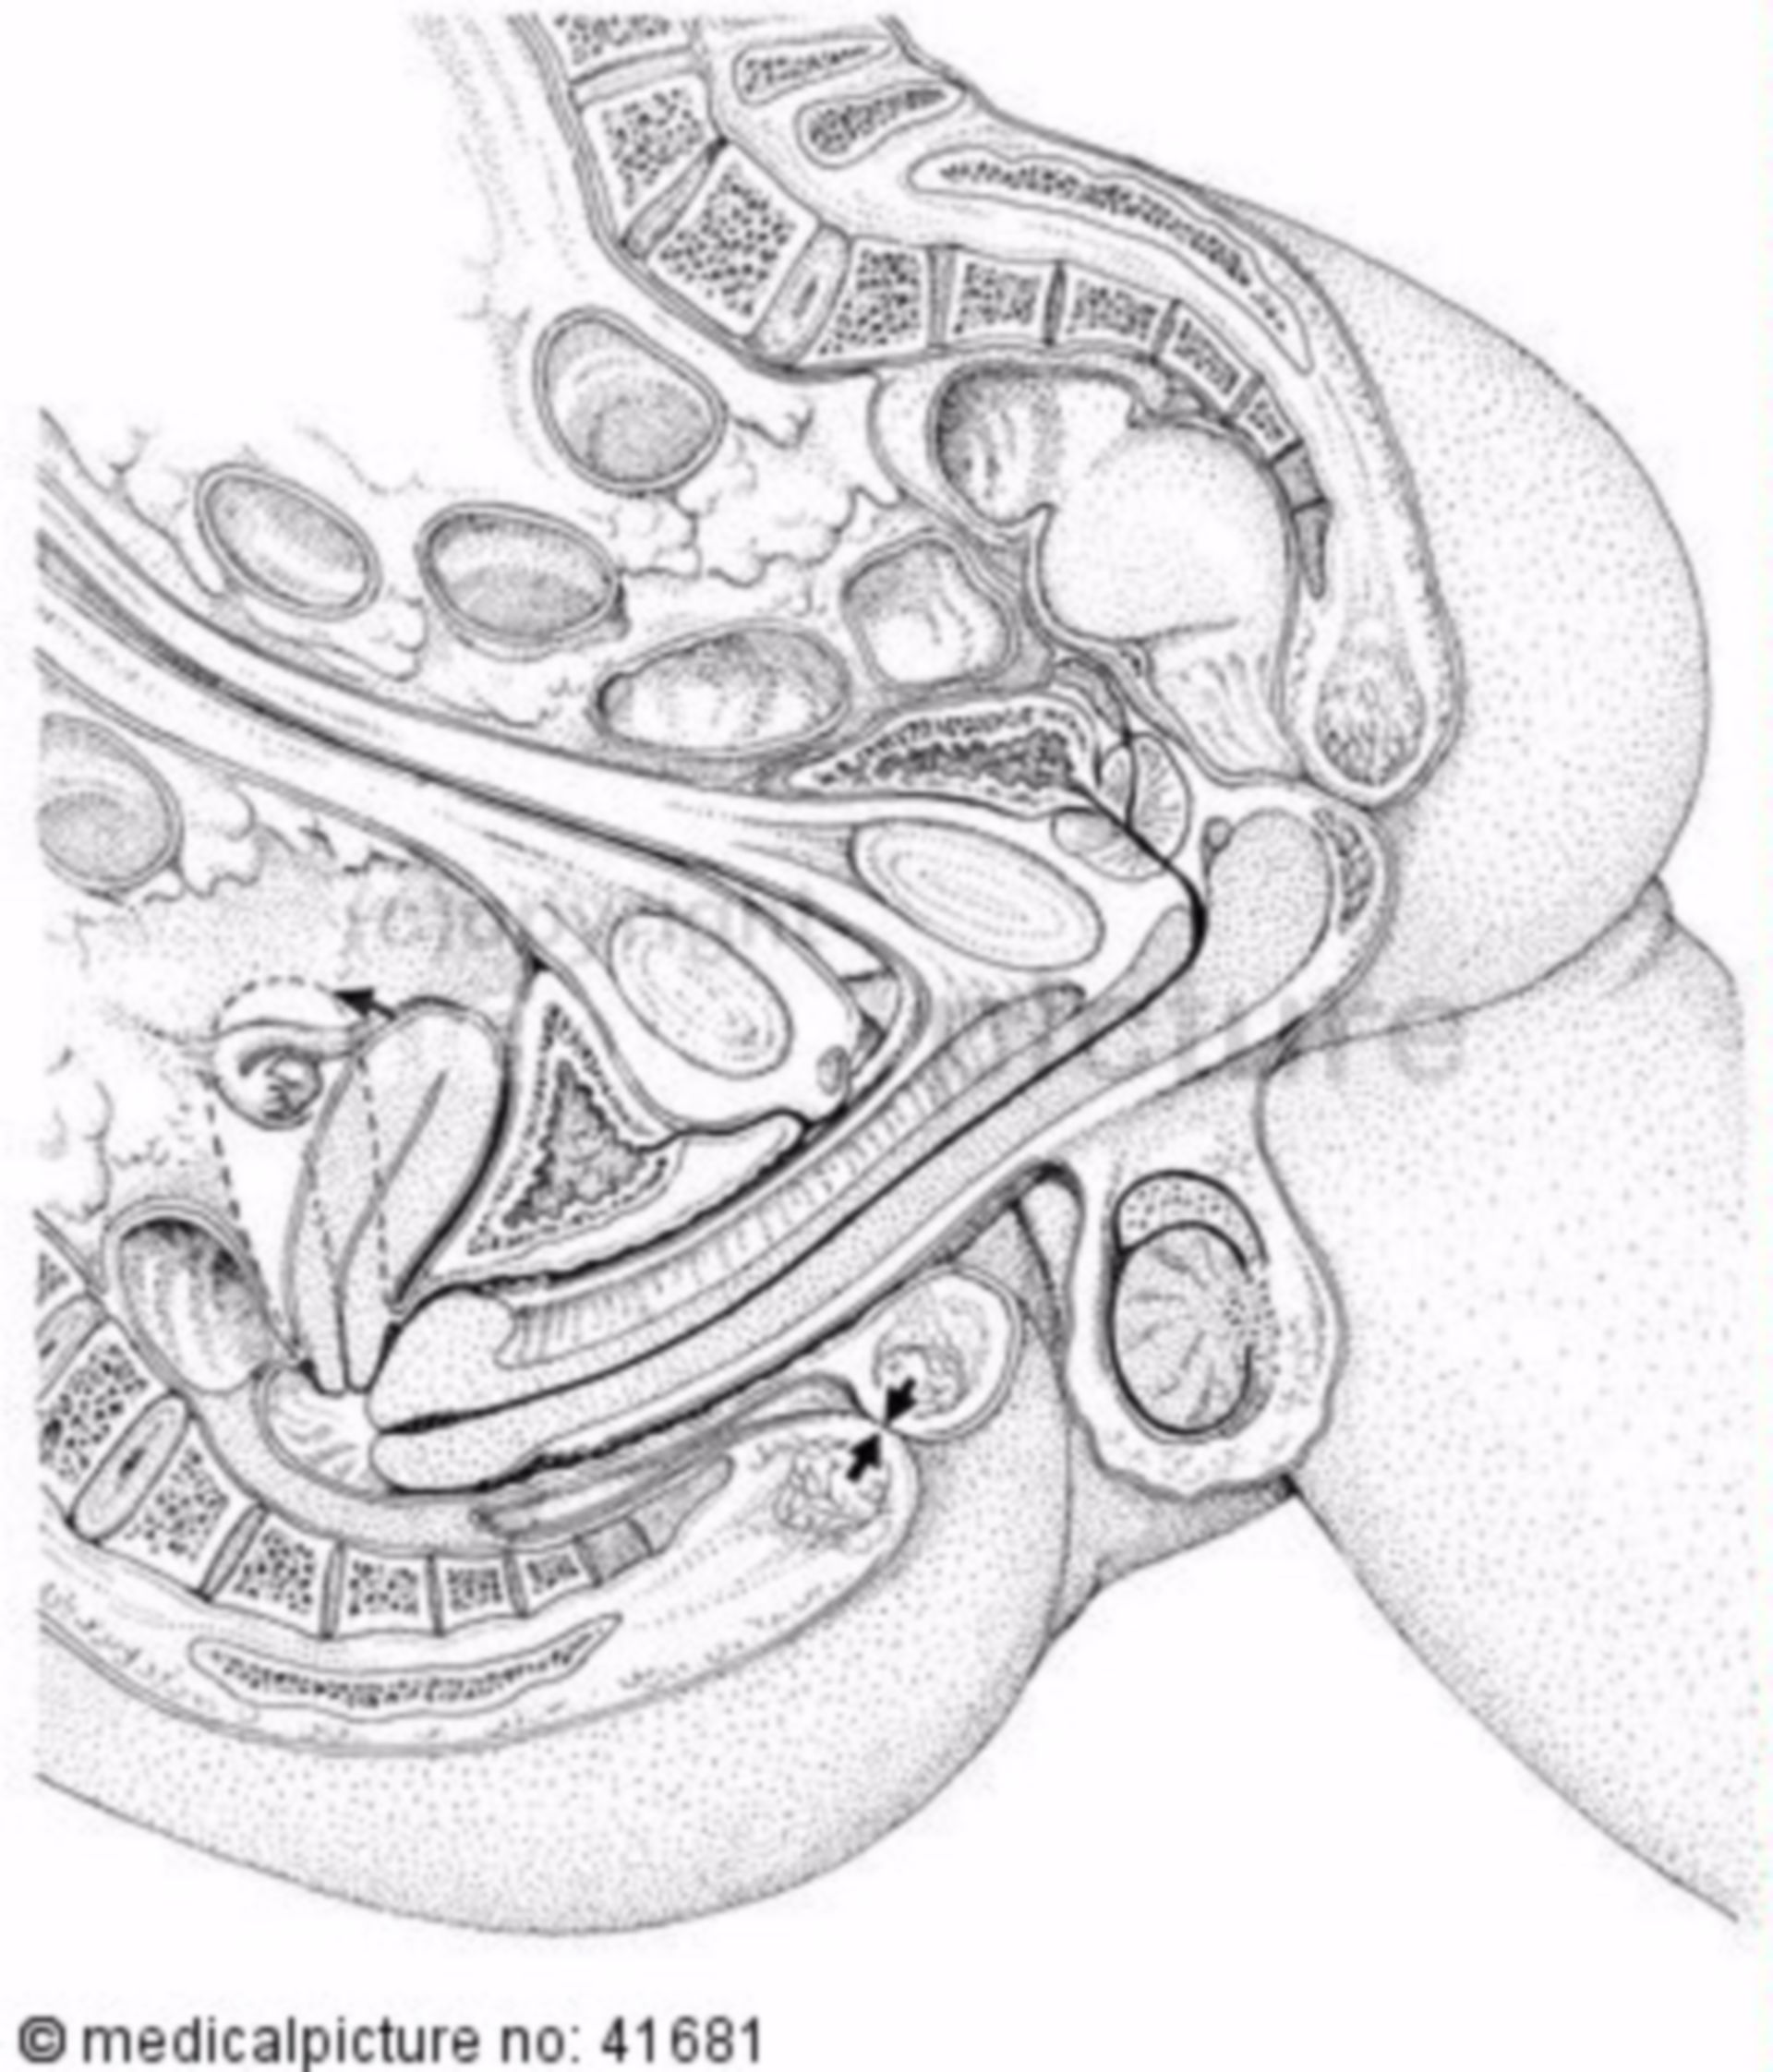 анатомия мужского анала фото 80